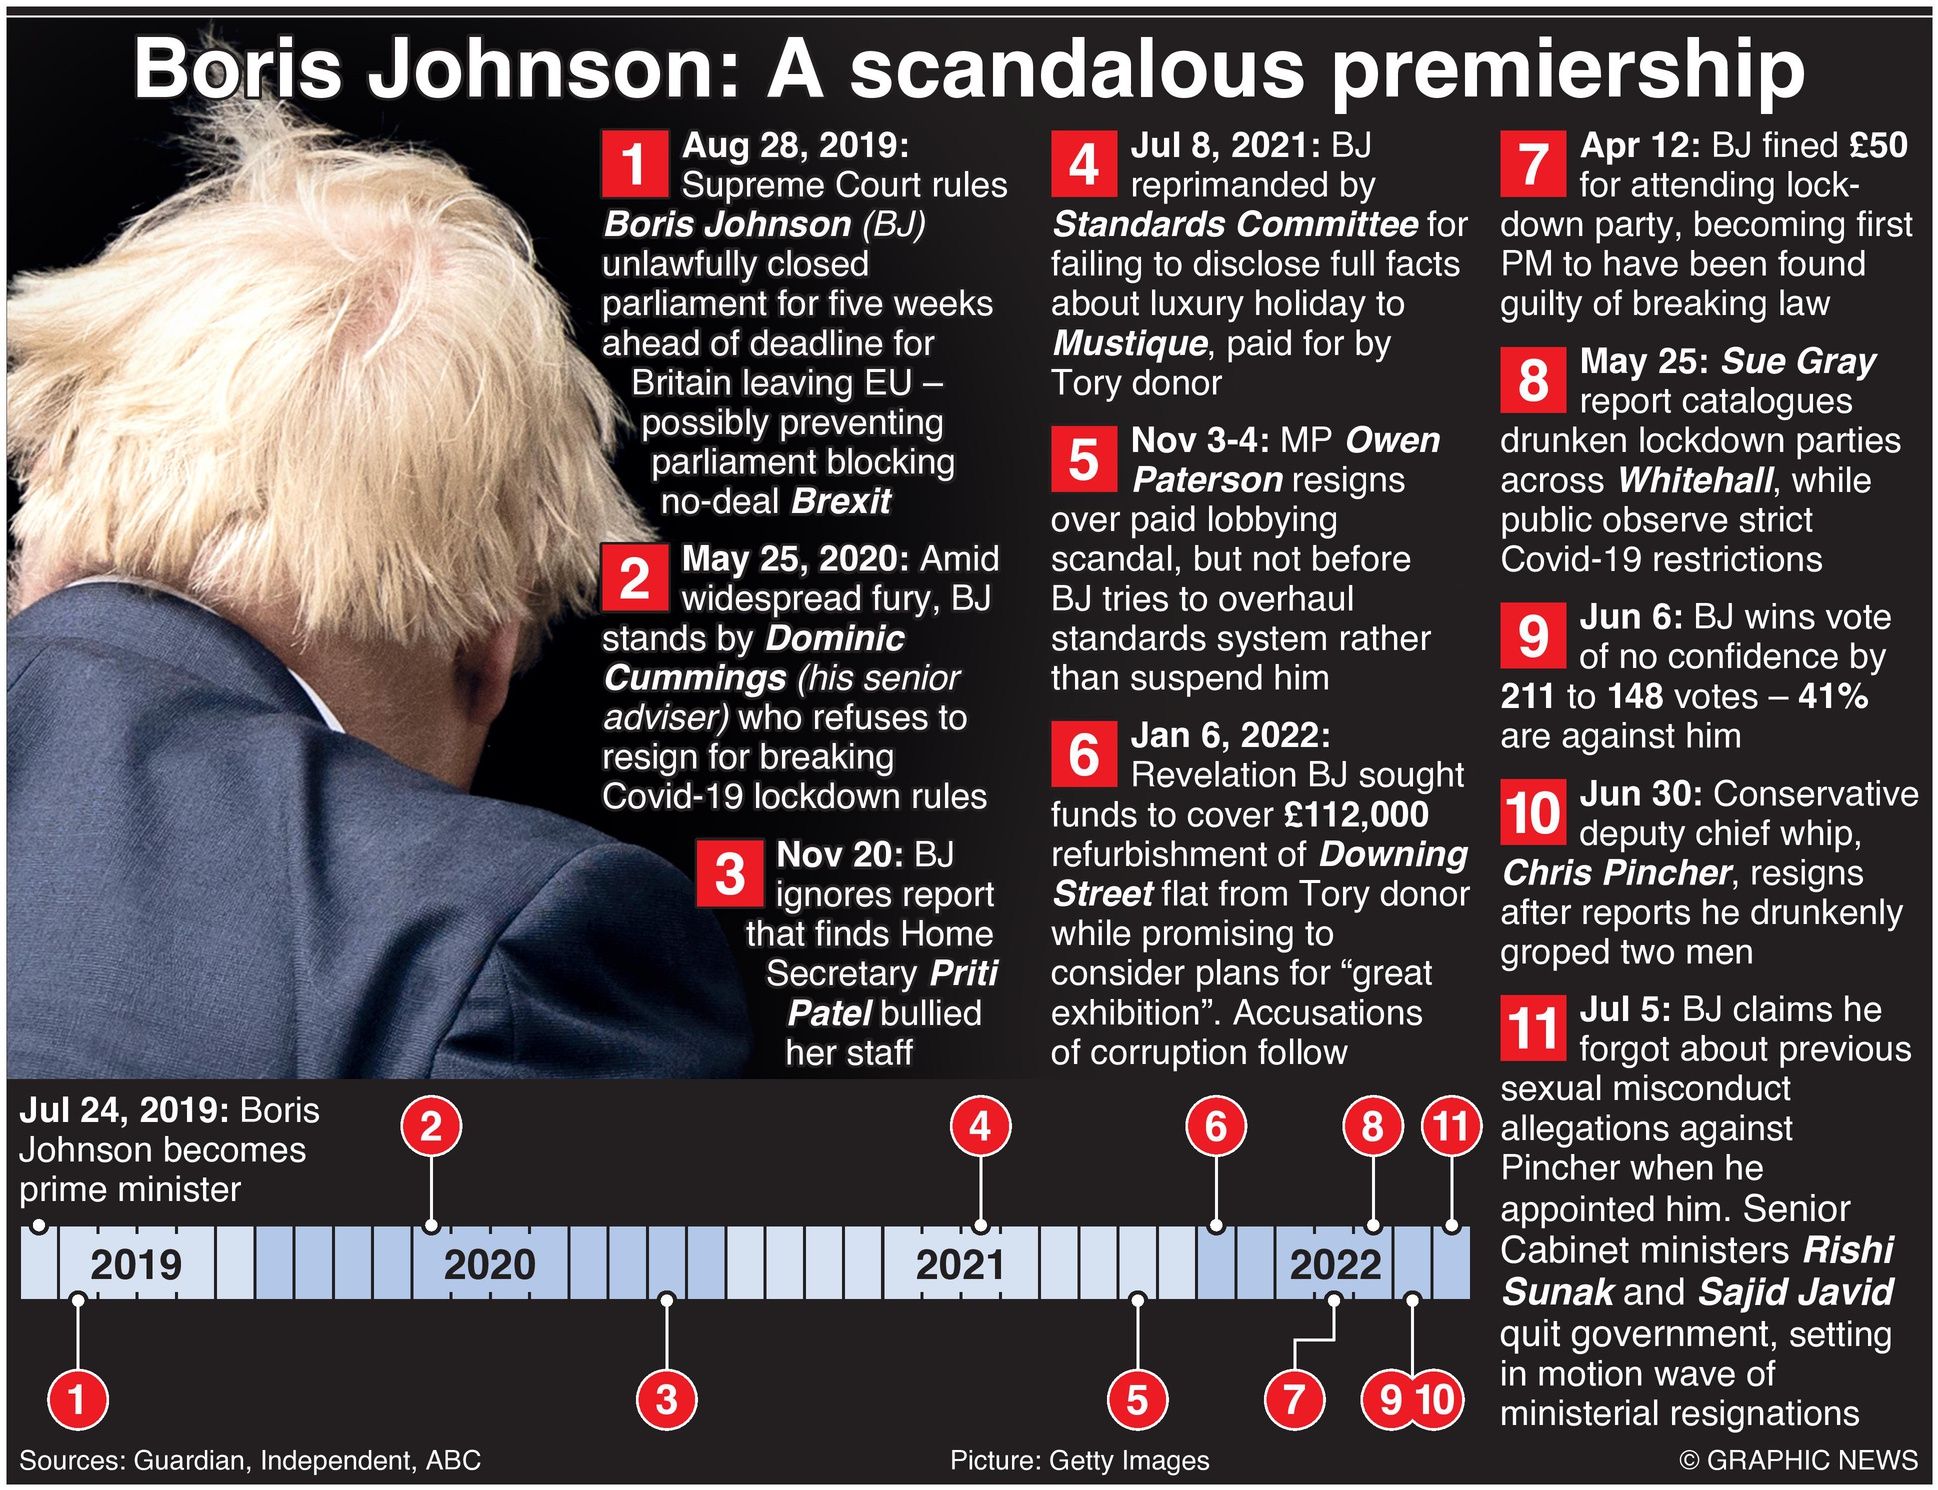 Timeline of Boris Johnsons scandalous premiership